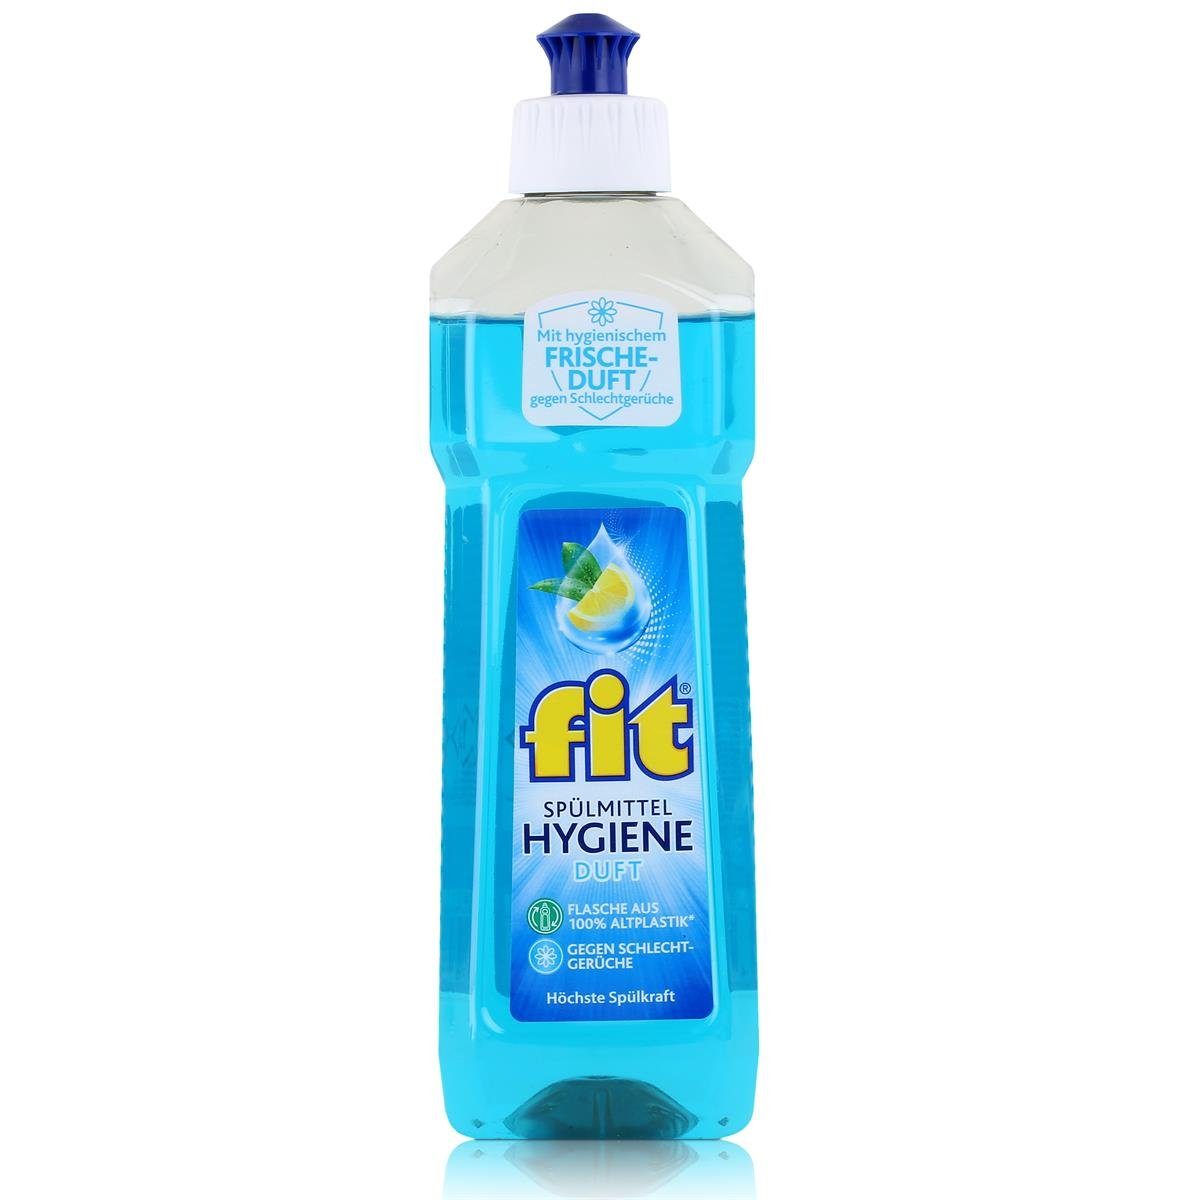 FIT fit Spülmittel Hygiene Duft 500ml - Höchste Spülkraft (1er Pack) Geschirrspülmittel